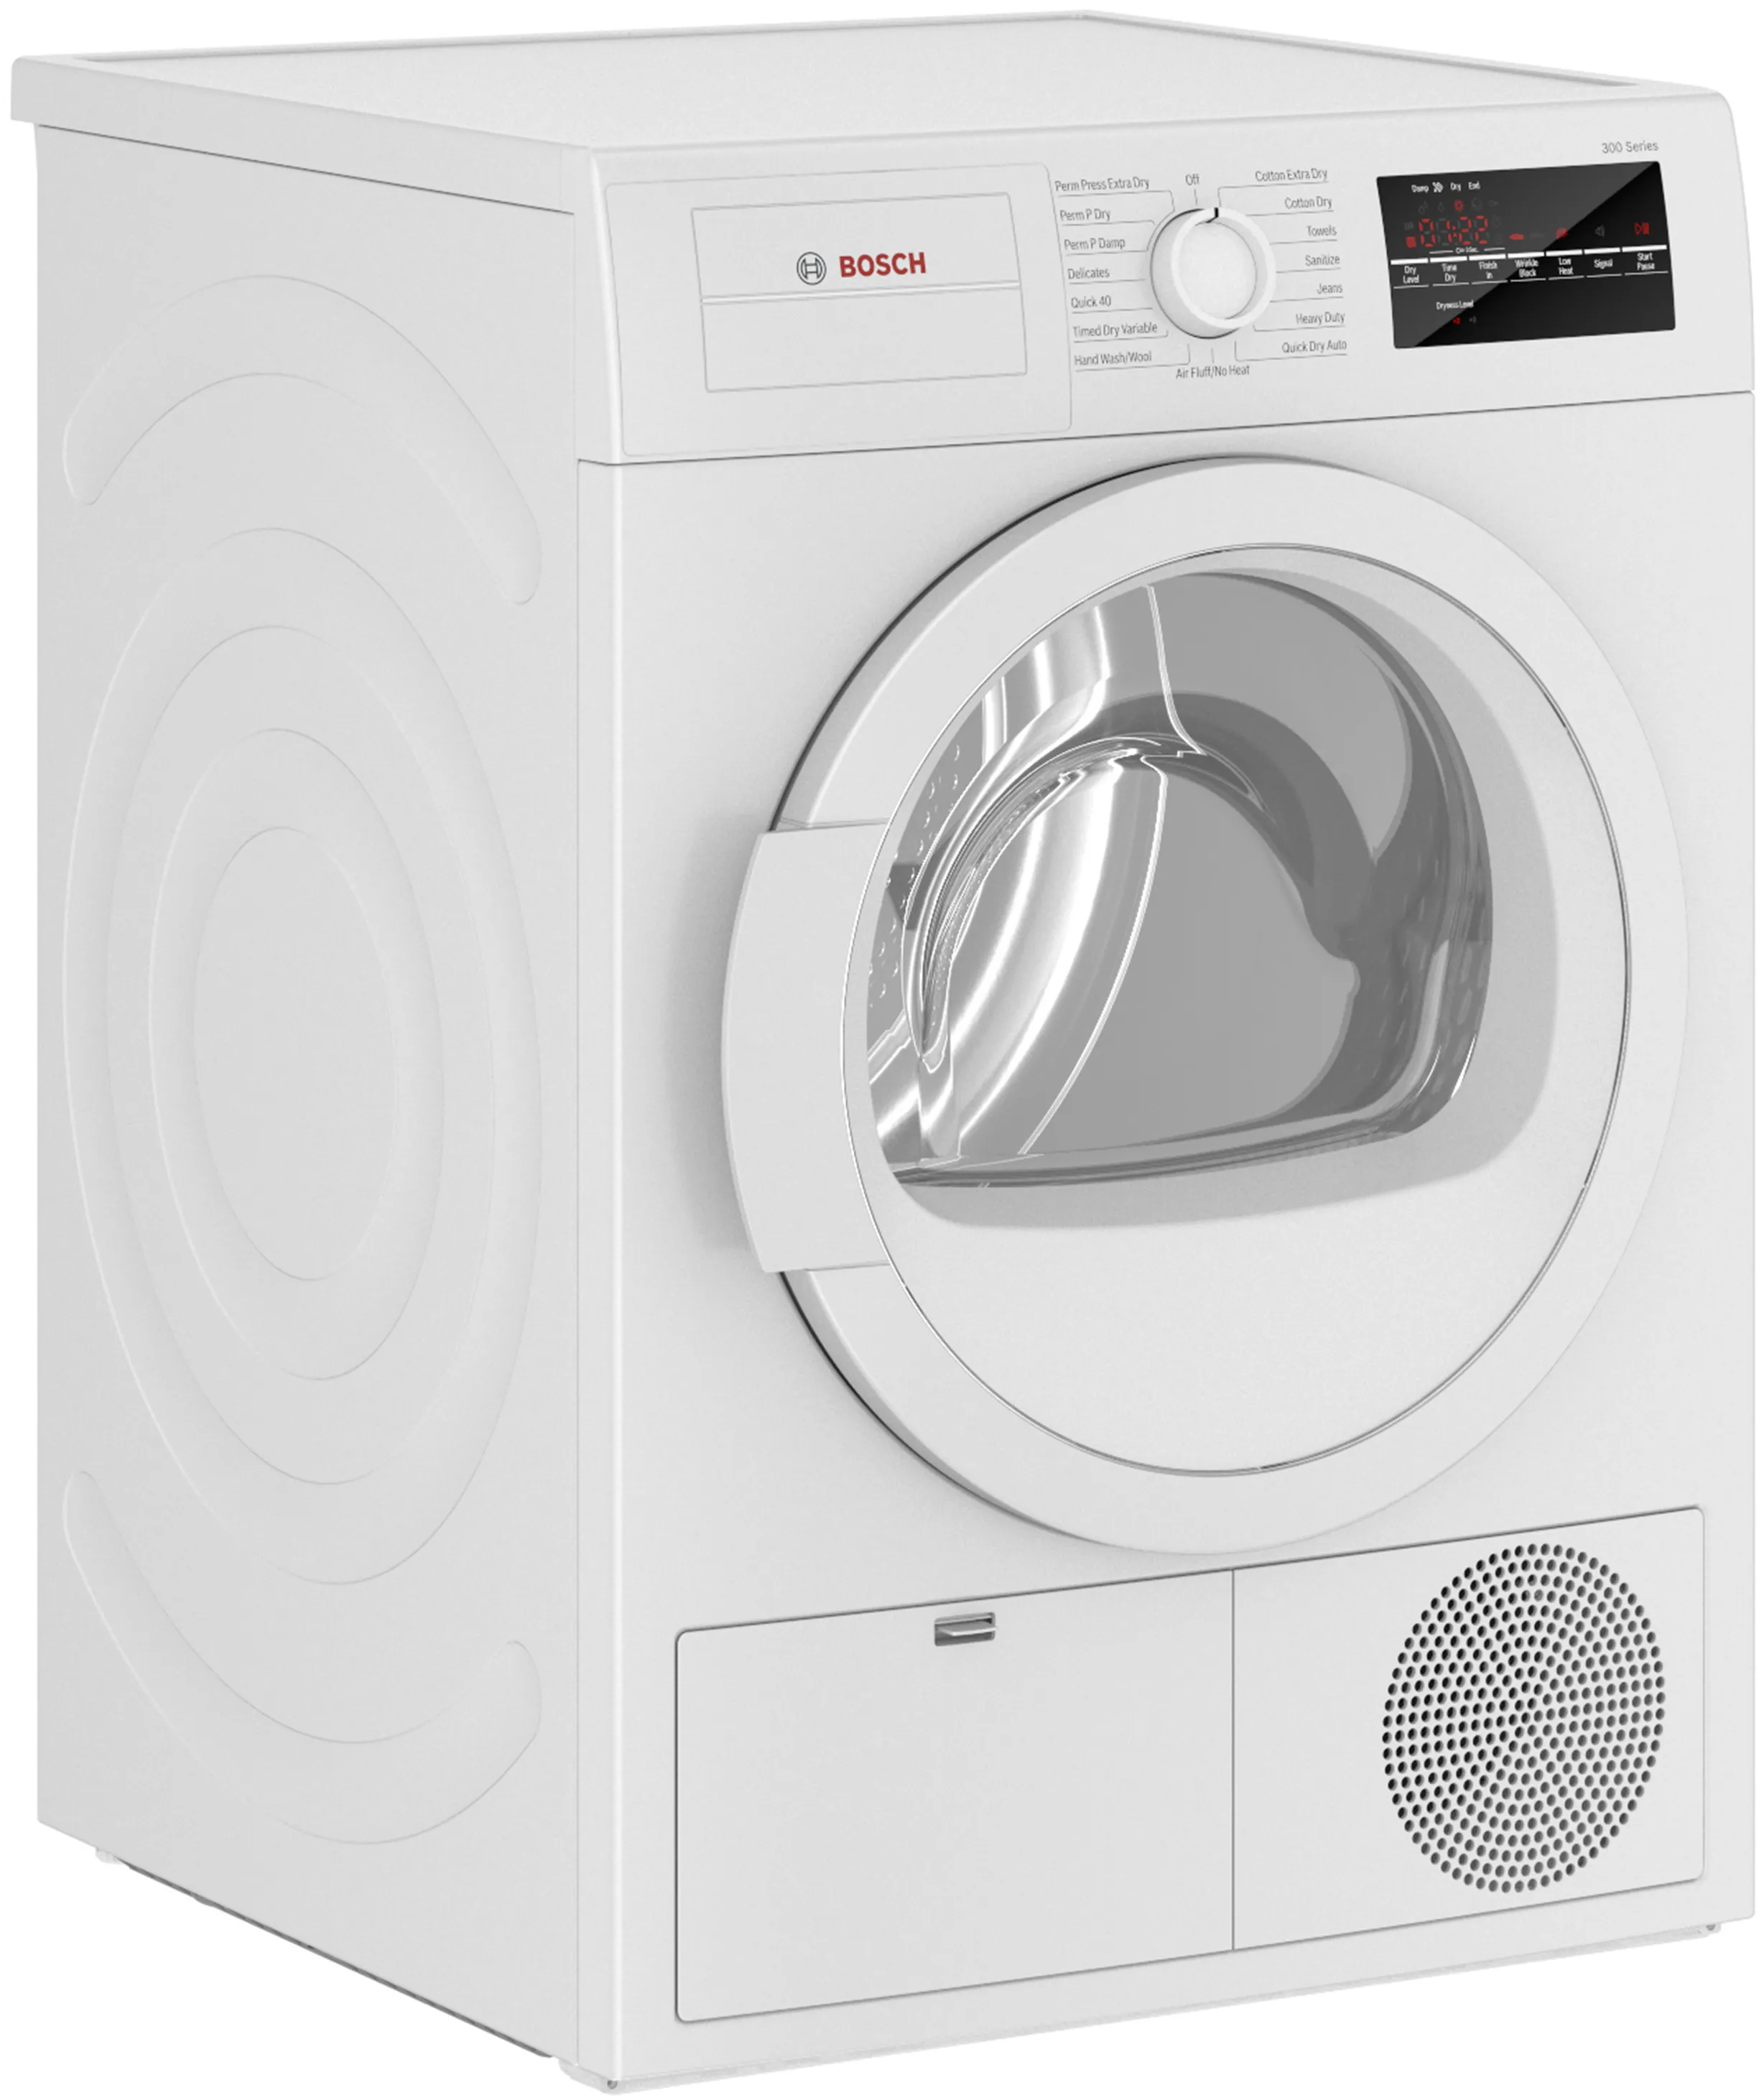 300 Series Compact Condensation Dryer 